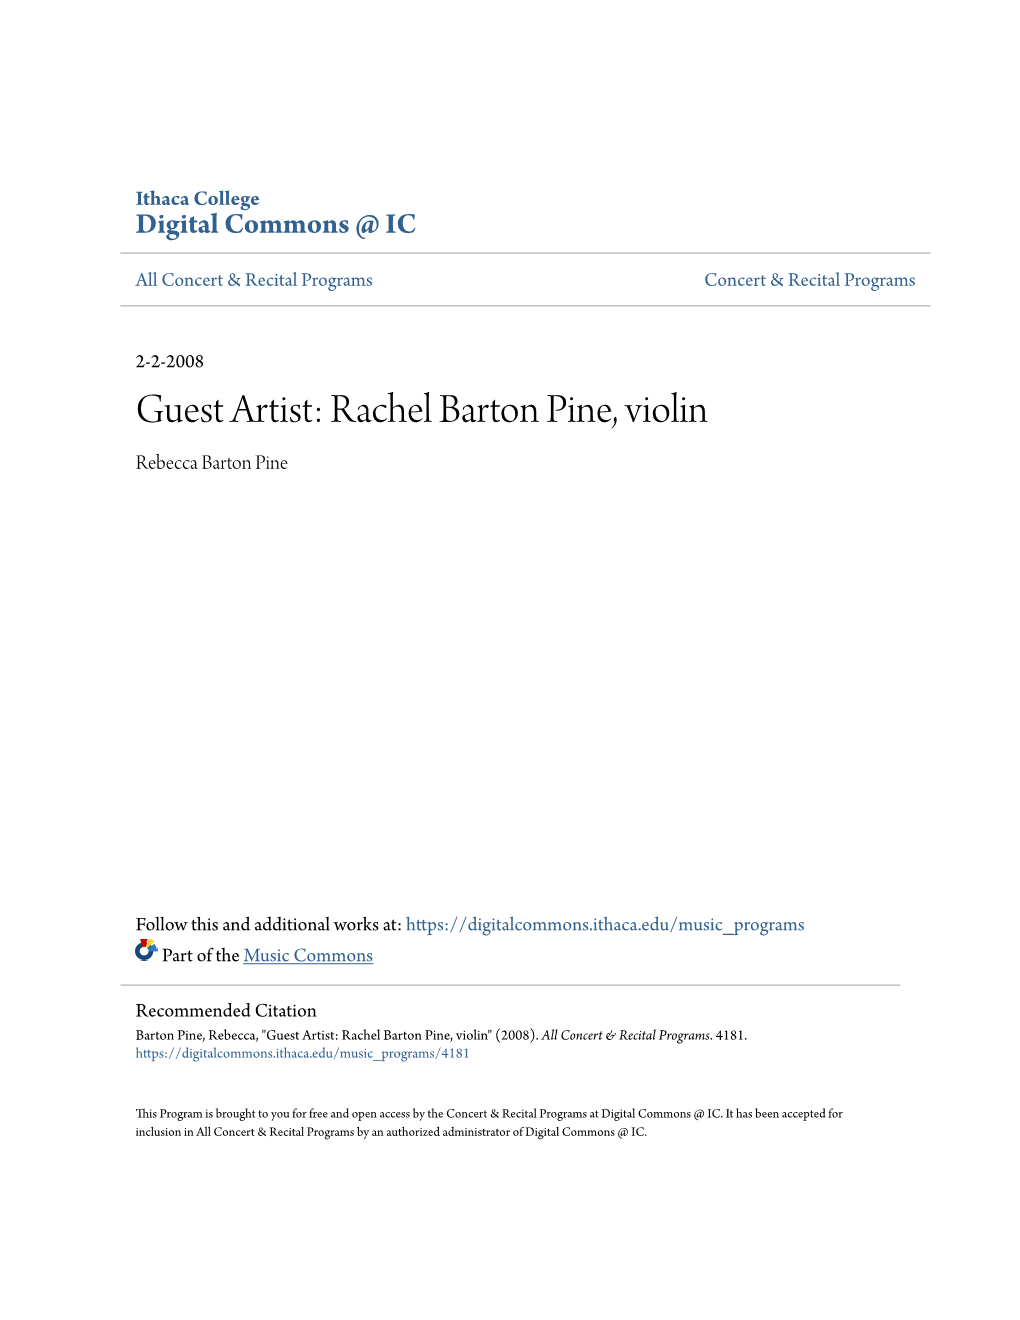 Rachel Barton Pine, Violin Rebecca Barton Pine